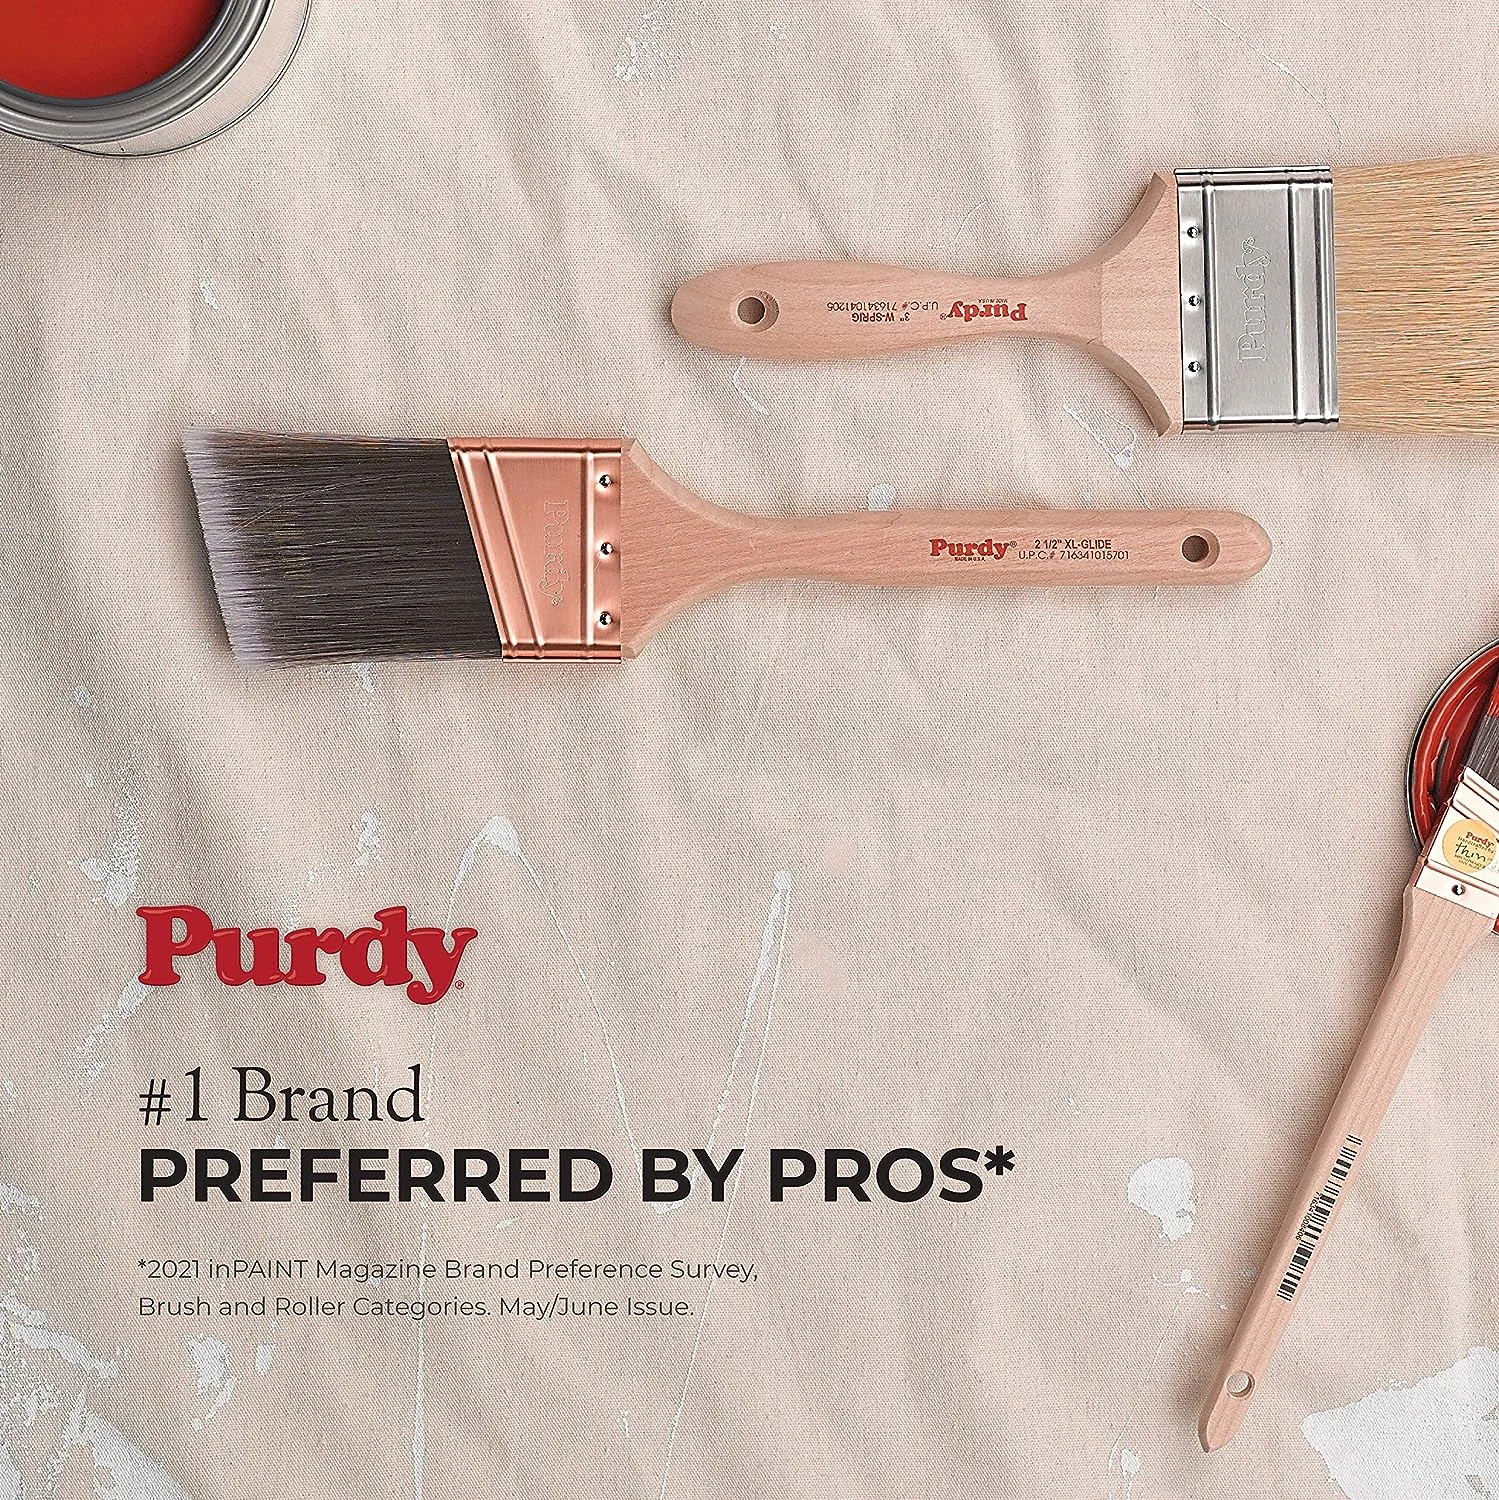 Purdy 144324330 XL Series Pip Enamel/Wall Paint Brush, 3 inch